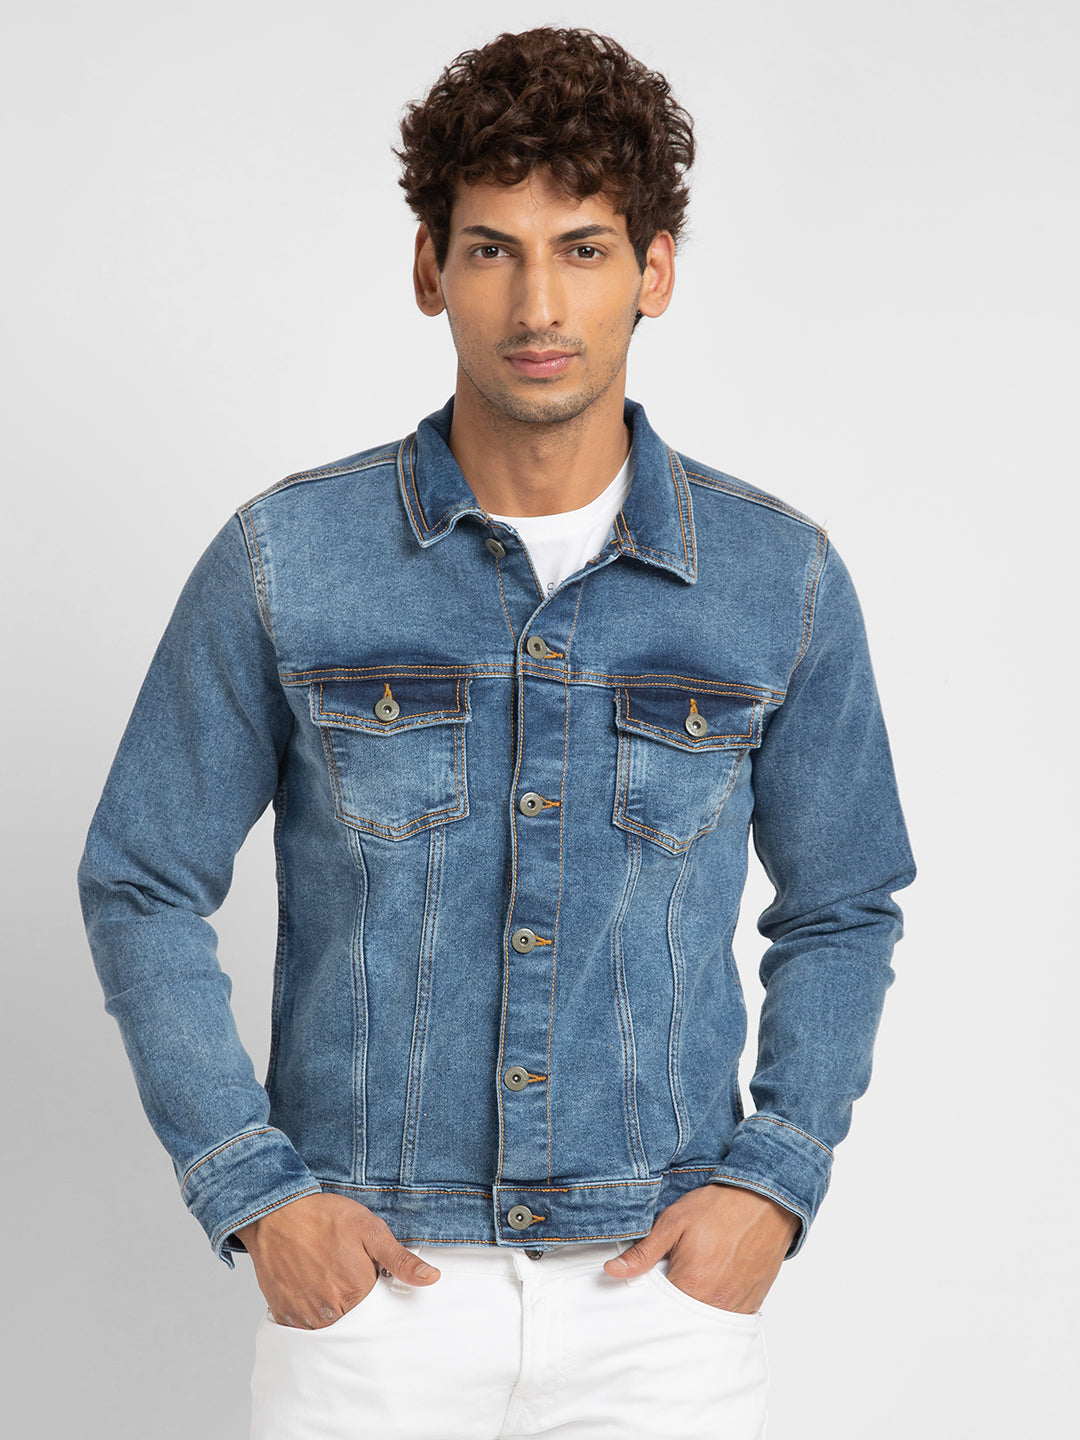 DOINLINE Men's Jeans Jacket Casual Lightweight India | Ubuy